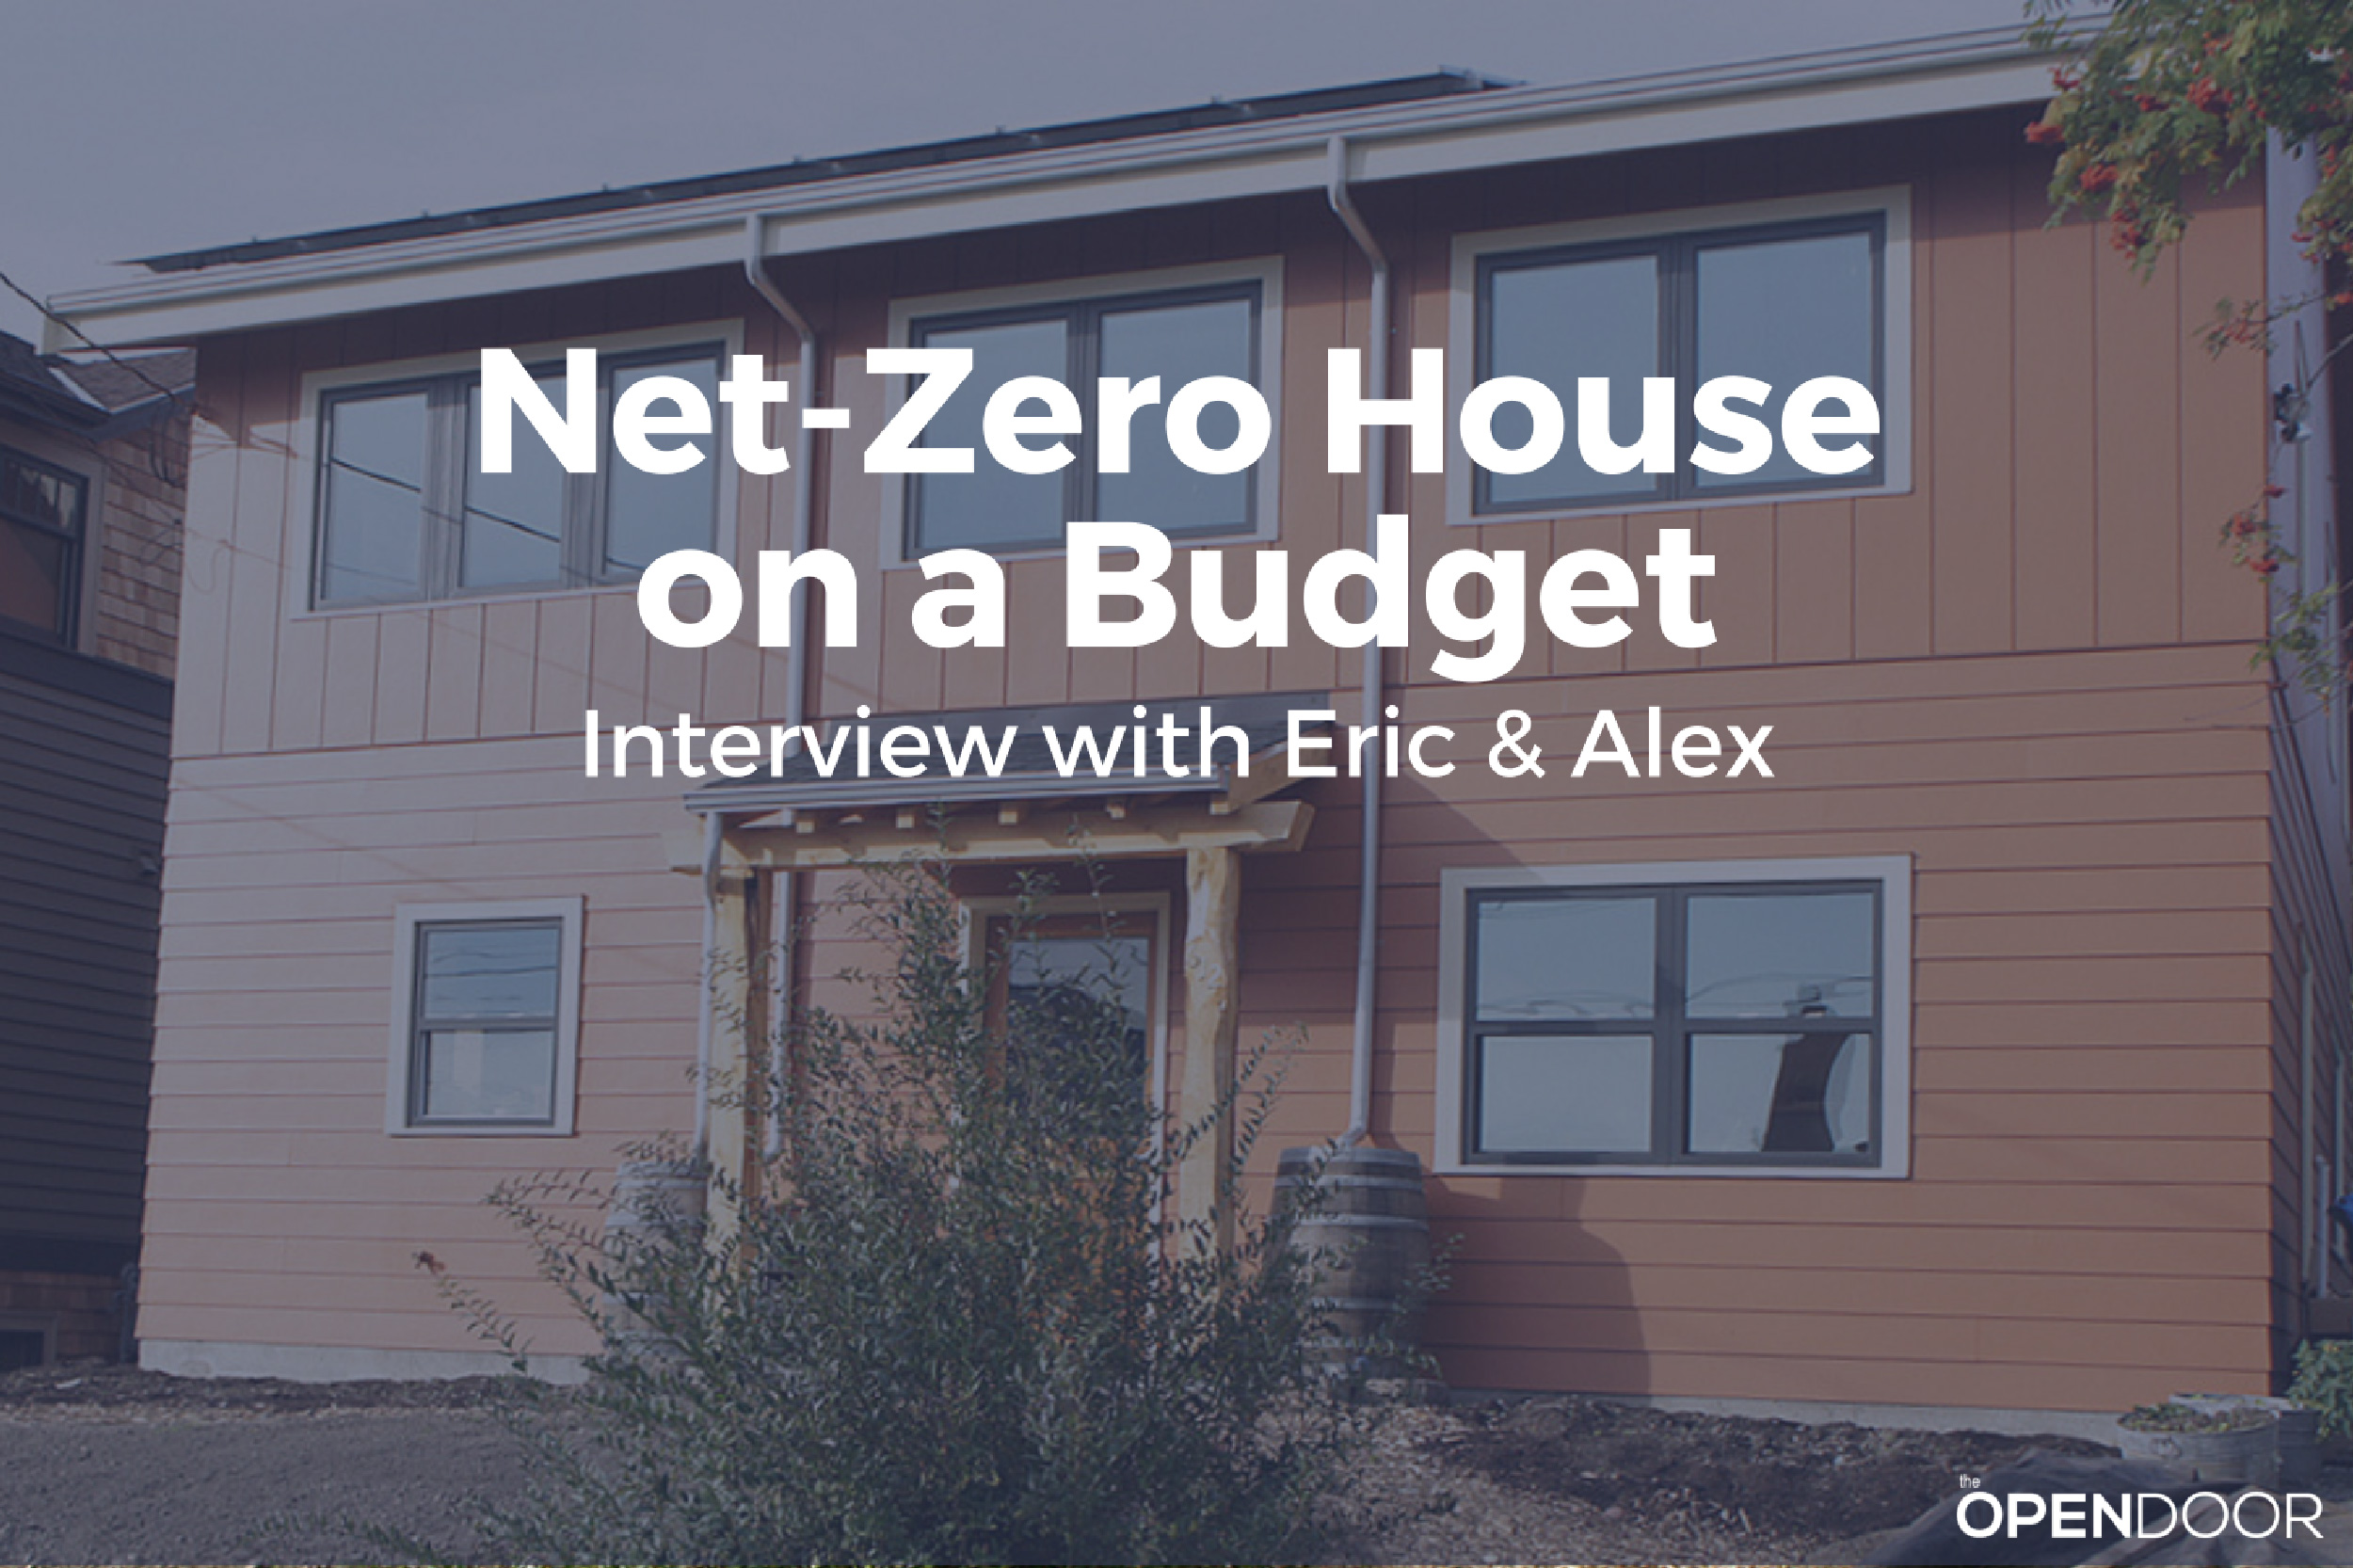 Net-Zero House on a Budget